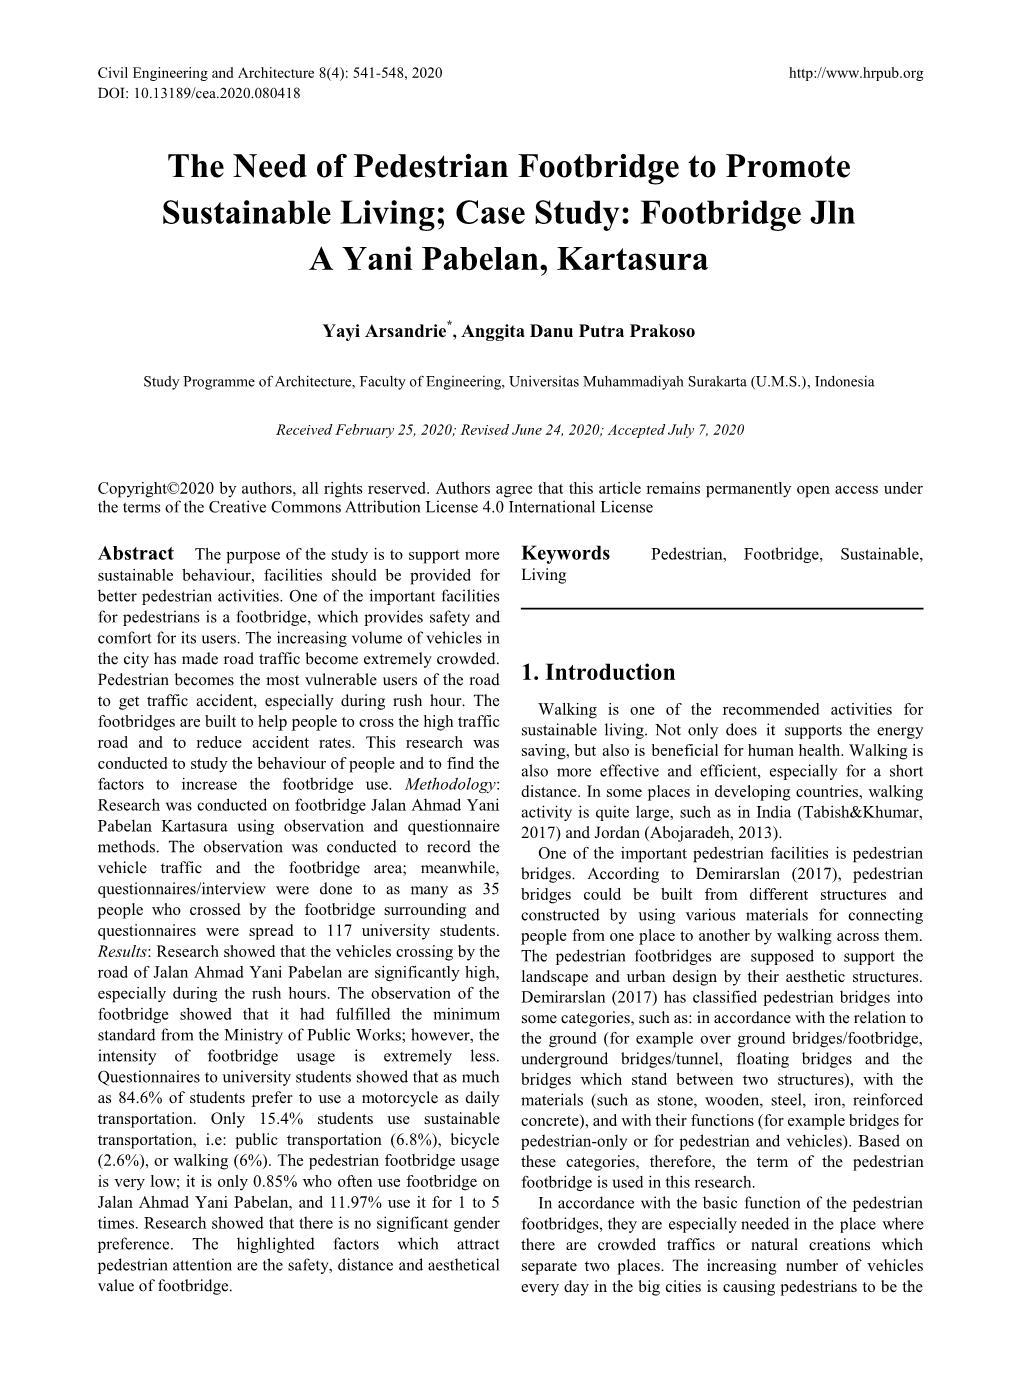 The Need of Pedestrian Footbridge to Promote Sustainable Living; Case Study: Footbridge Jln a Yani Pabelan, Kartasura